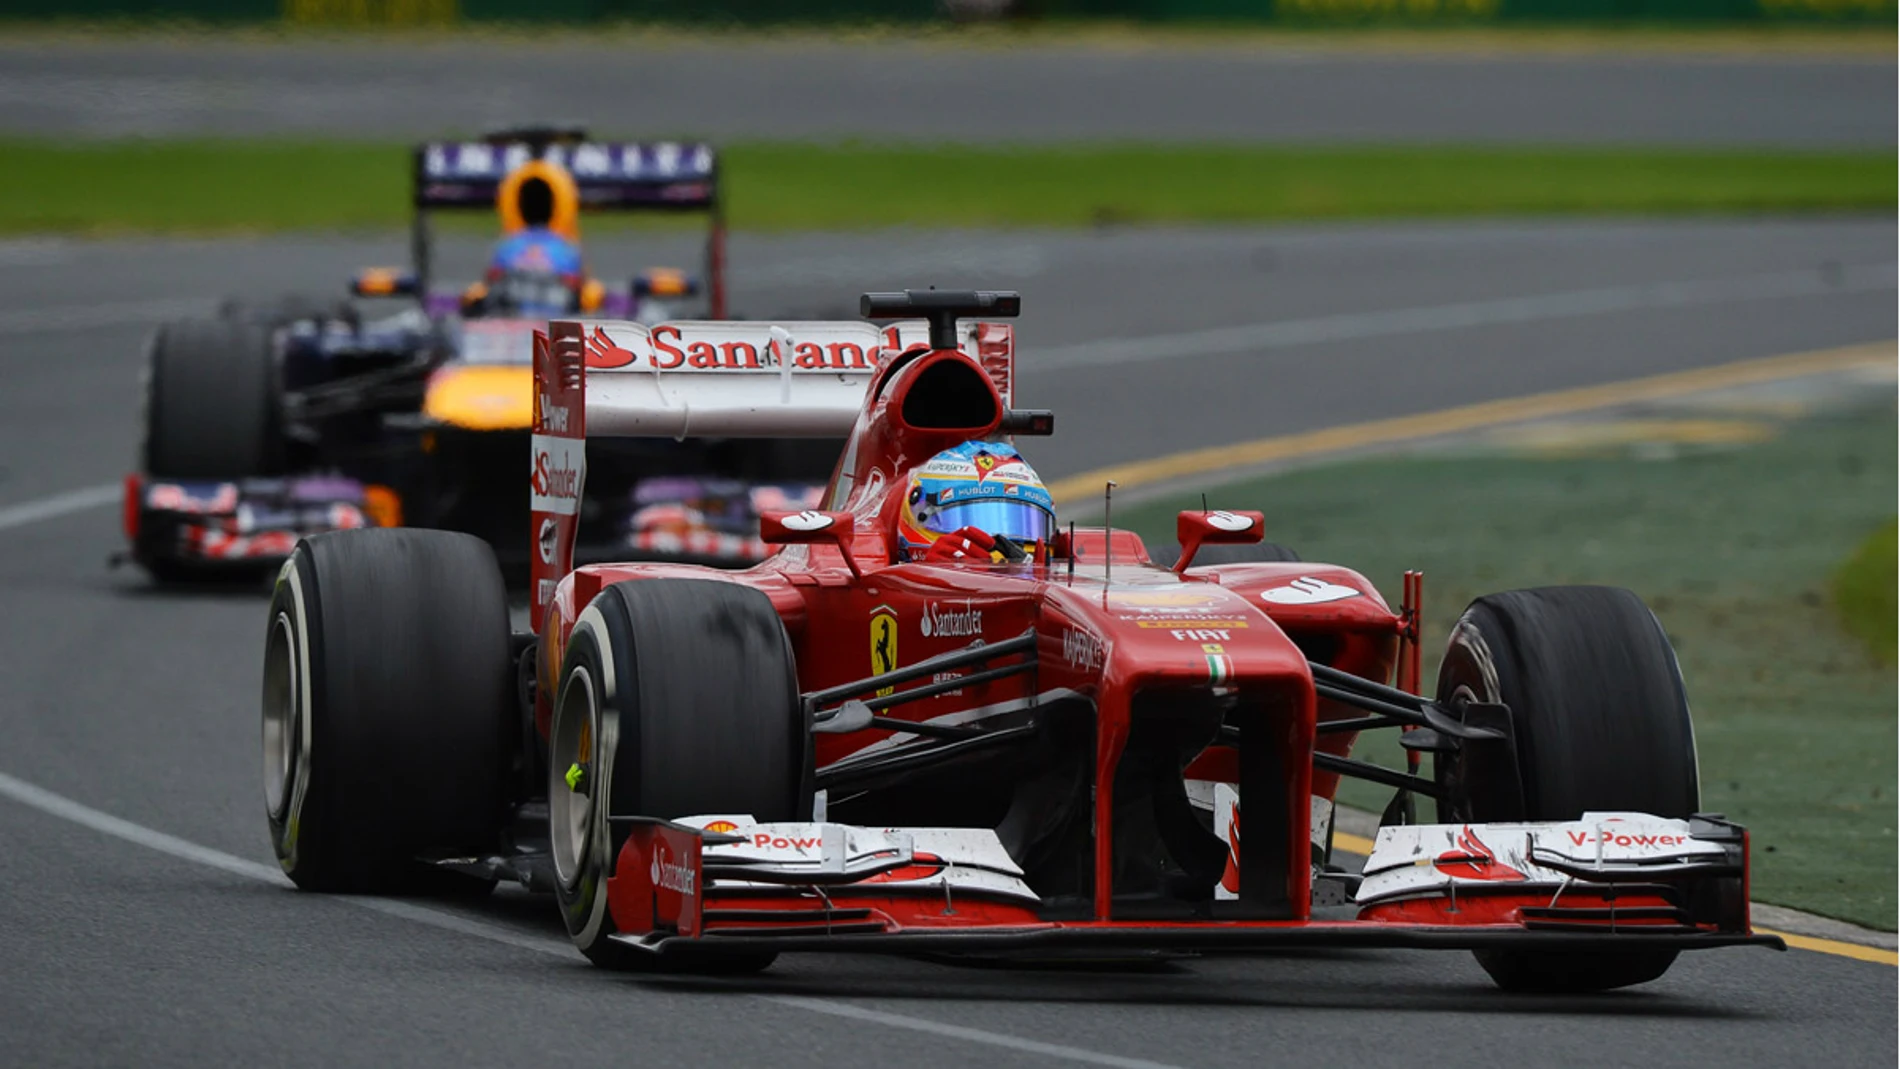 Alonso, delante del Red Bull de Webber